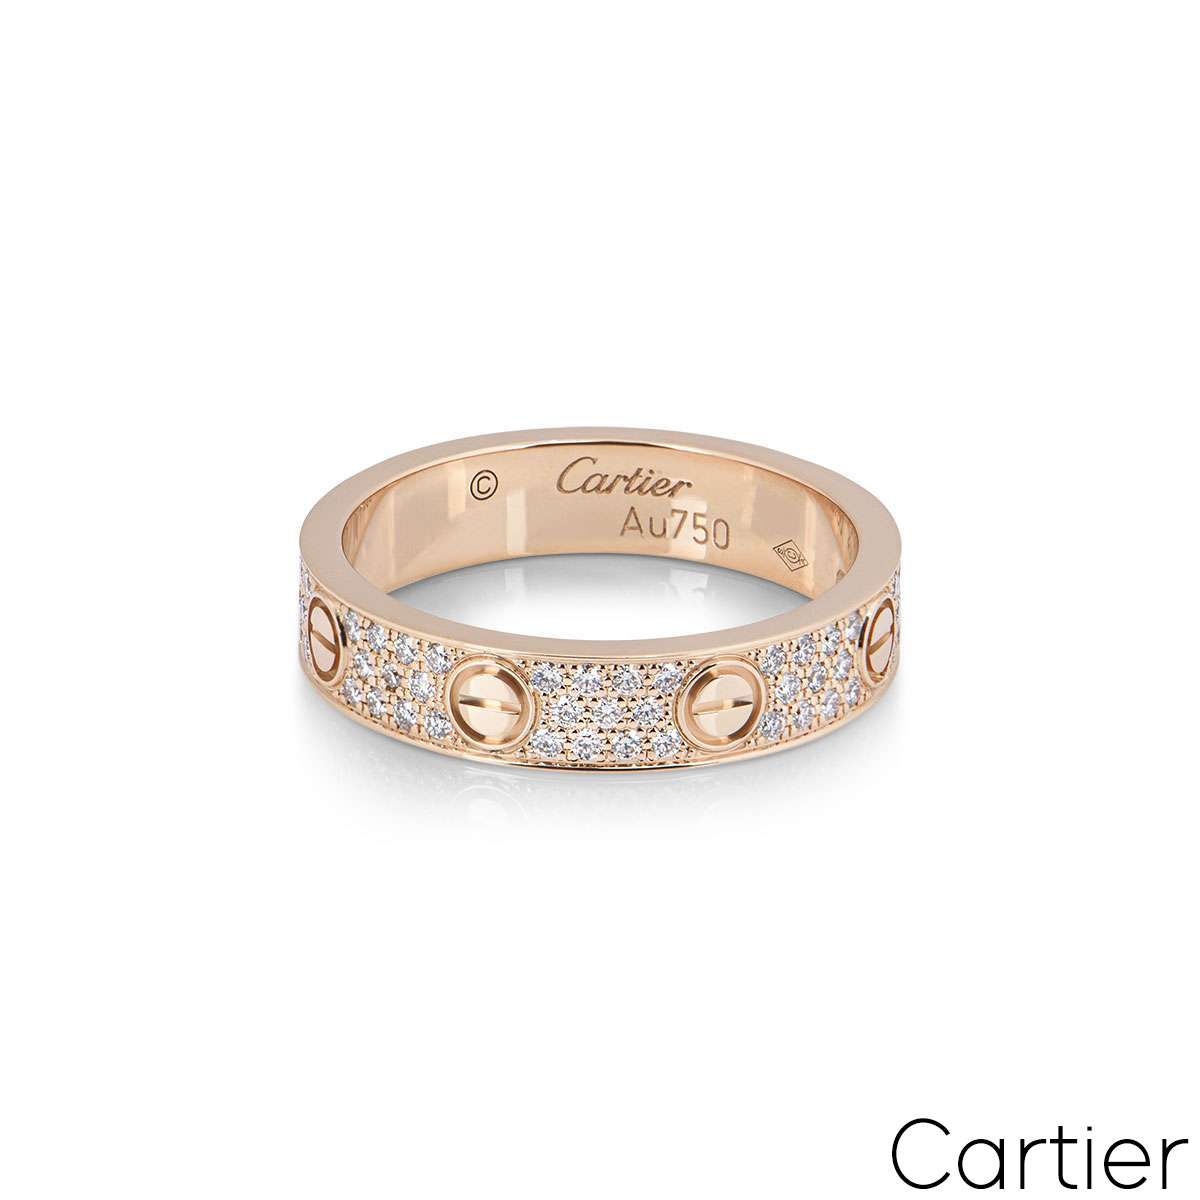 Cartier Rose Gold Pave Diamond Wedding Love Ring Size 53 B4085800